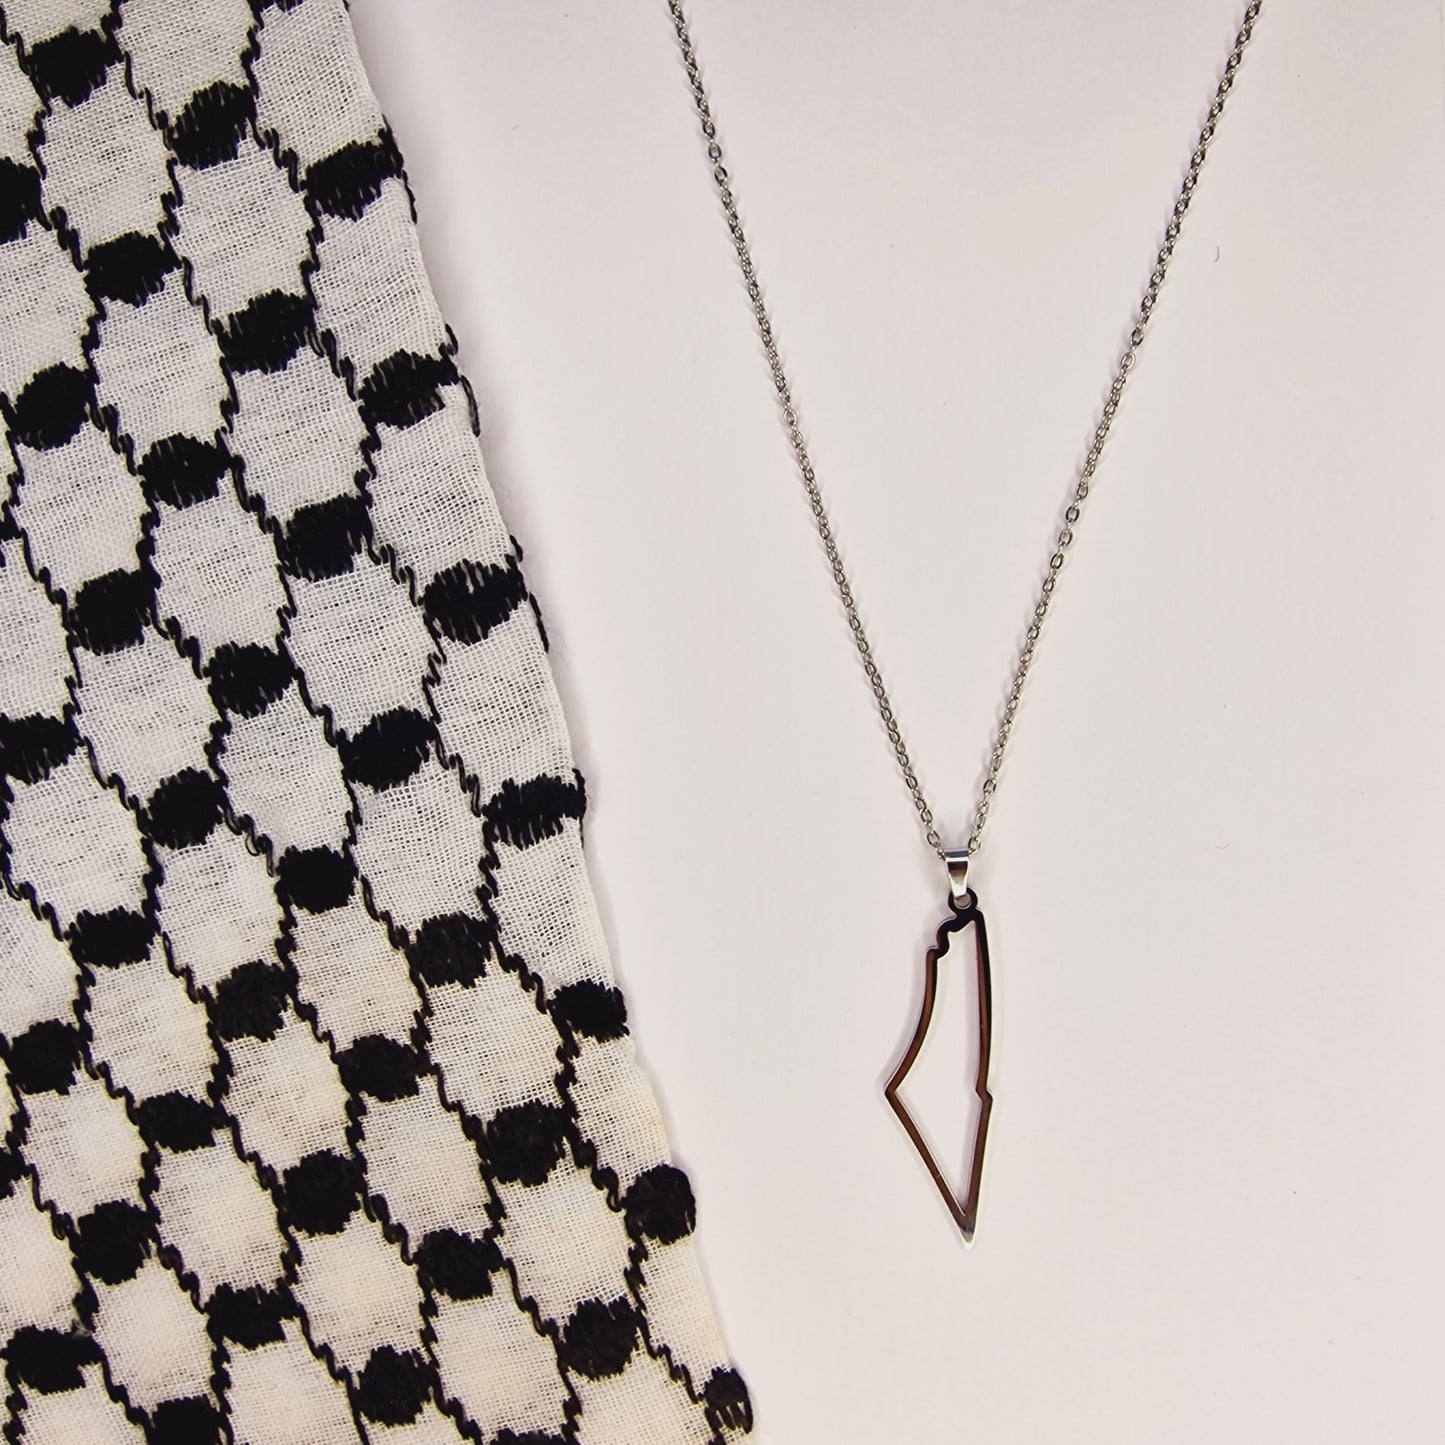 Palestine Pendant necklace